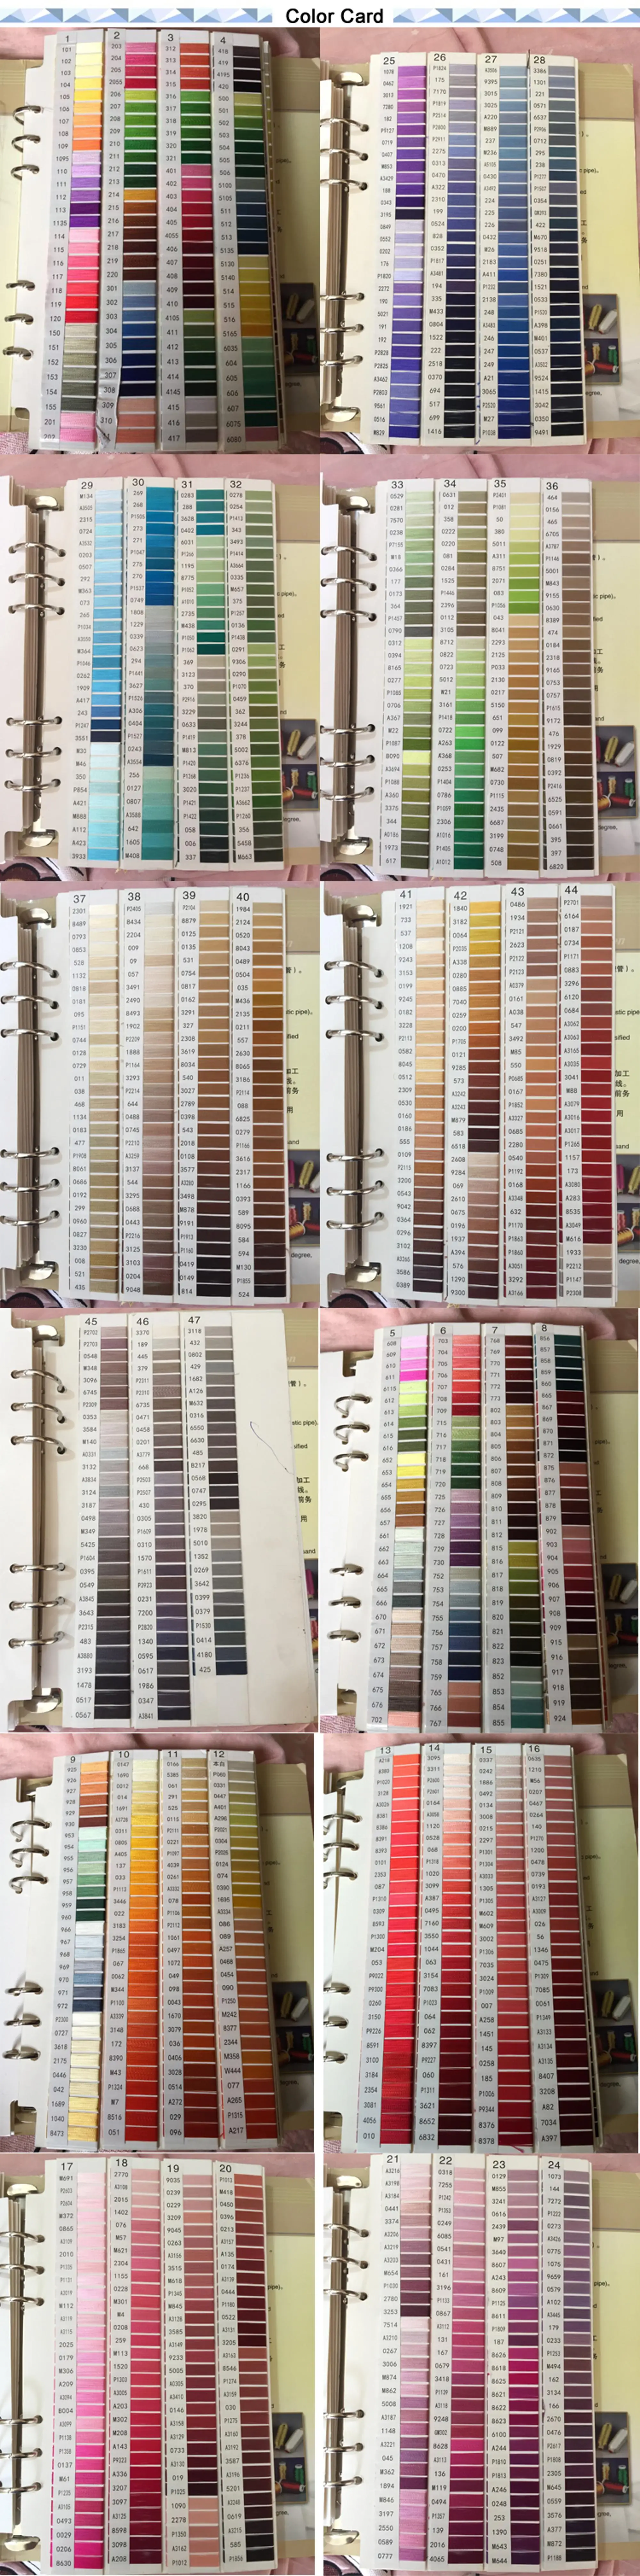 Fufu Thread Color Chart